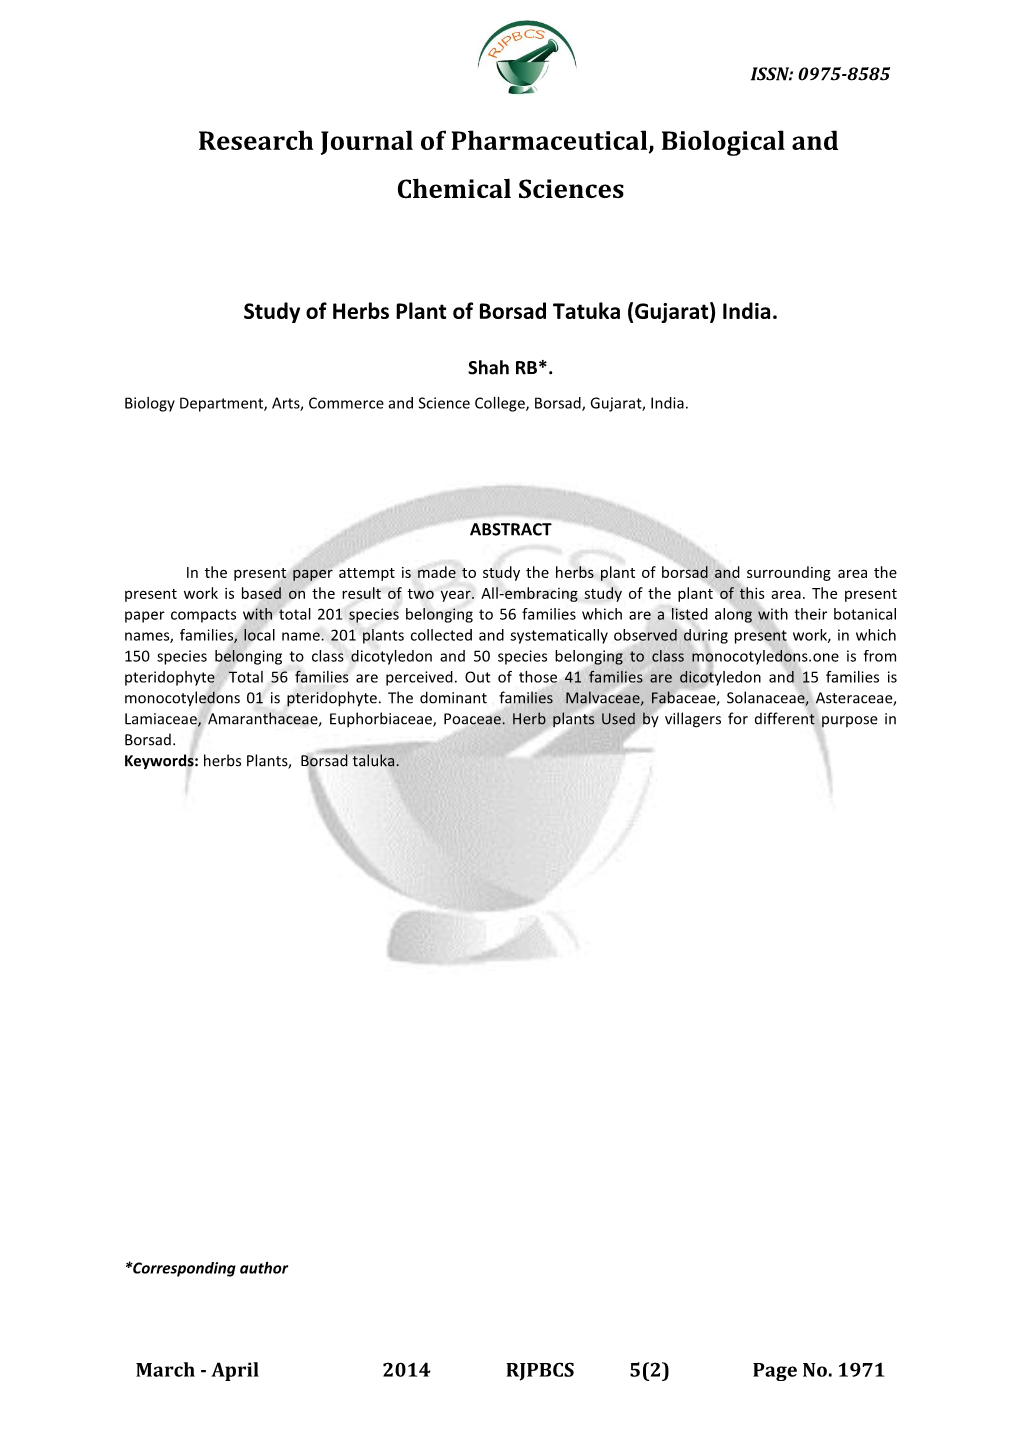 Study of Herbs Plant of Borsad Tatuka (Gujarat) India